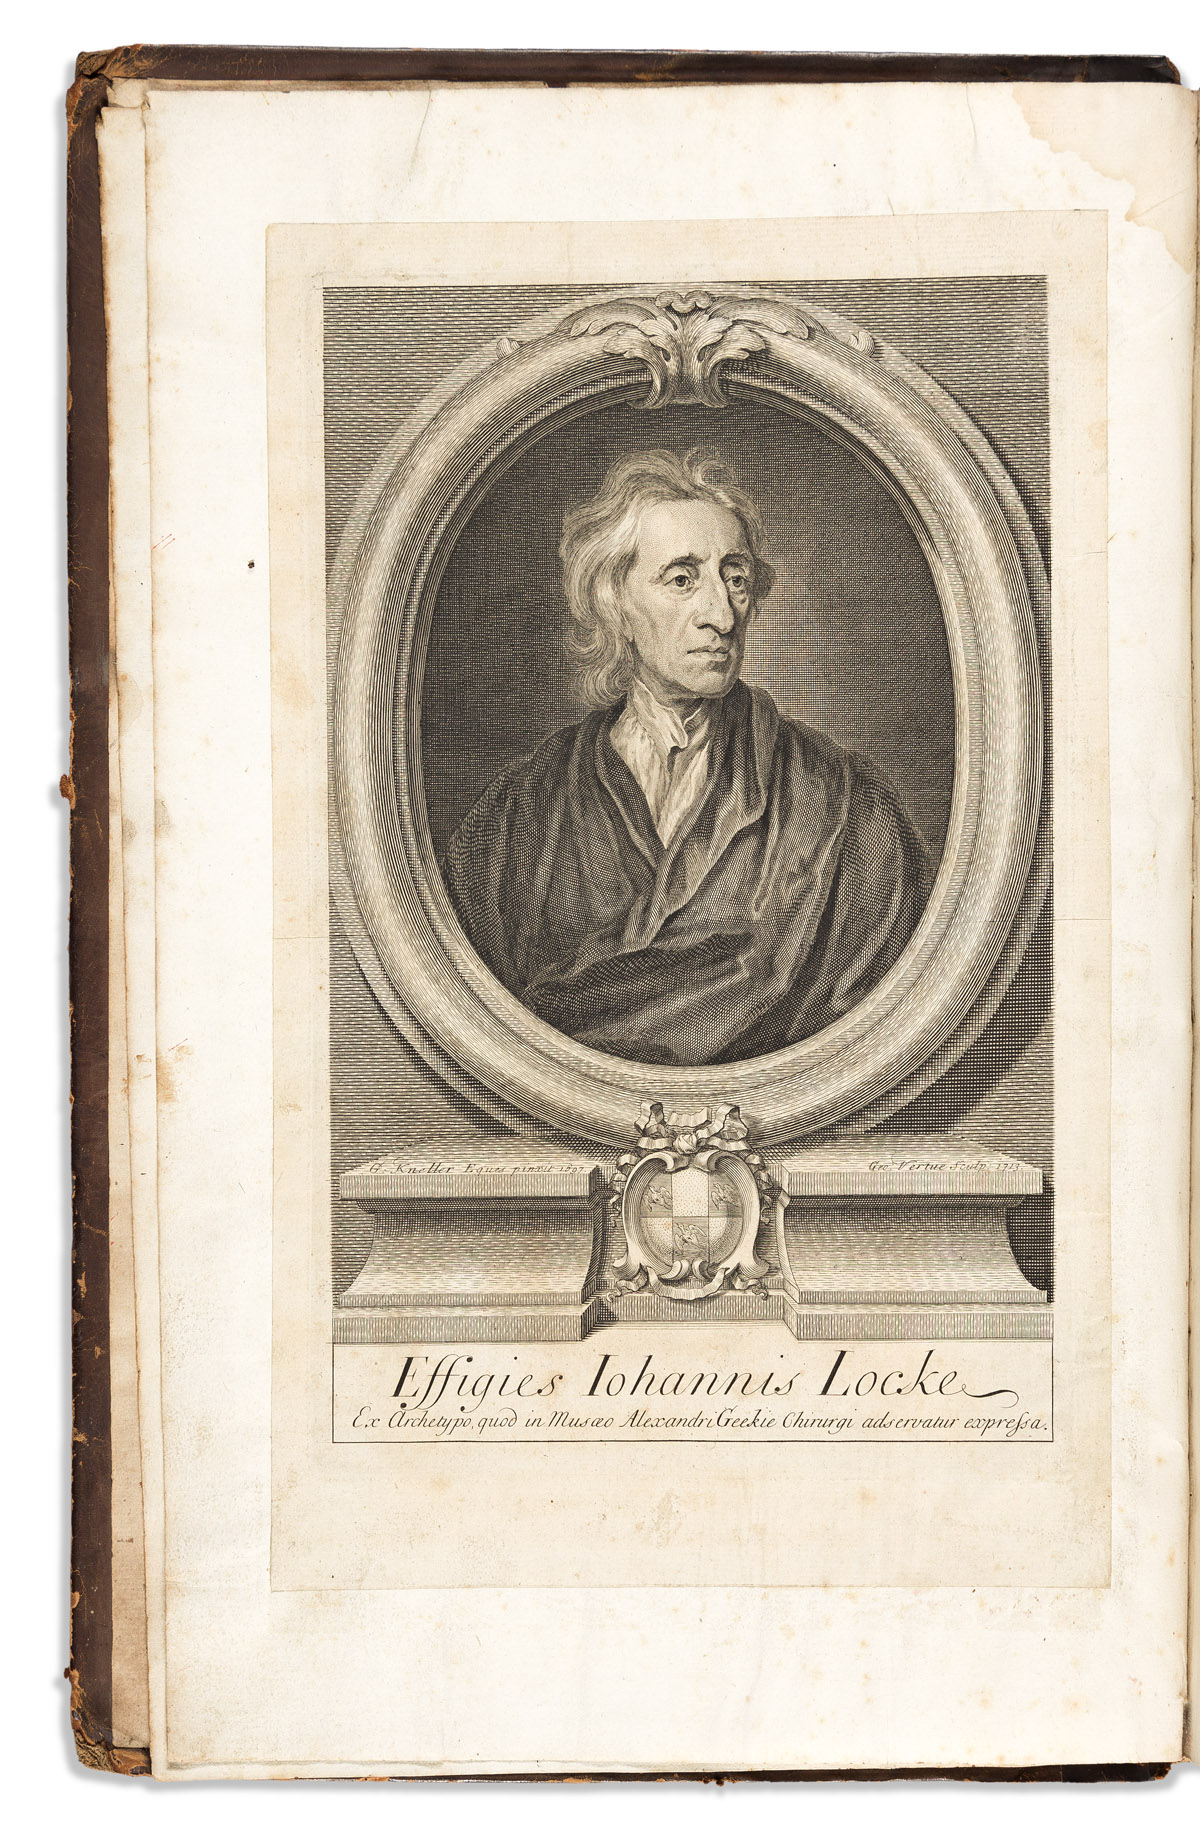 Locke, John (1632-1704) An Essay Concerning Humane Understanding in Four Books.